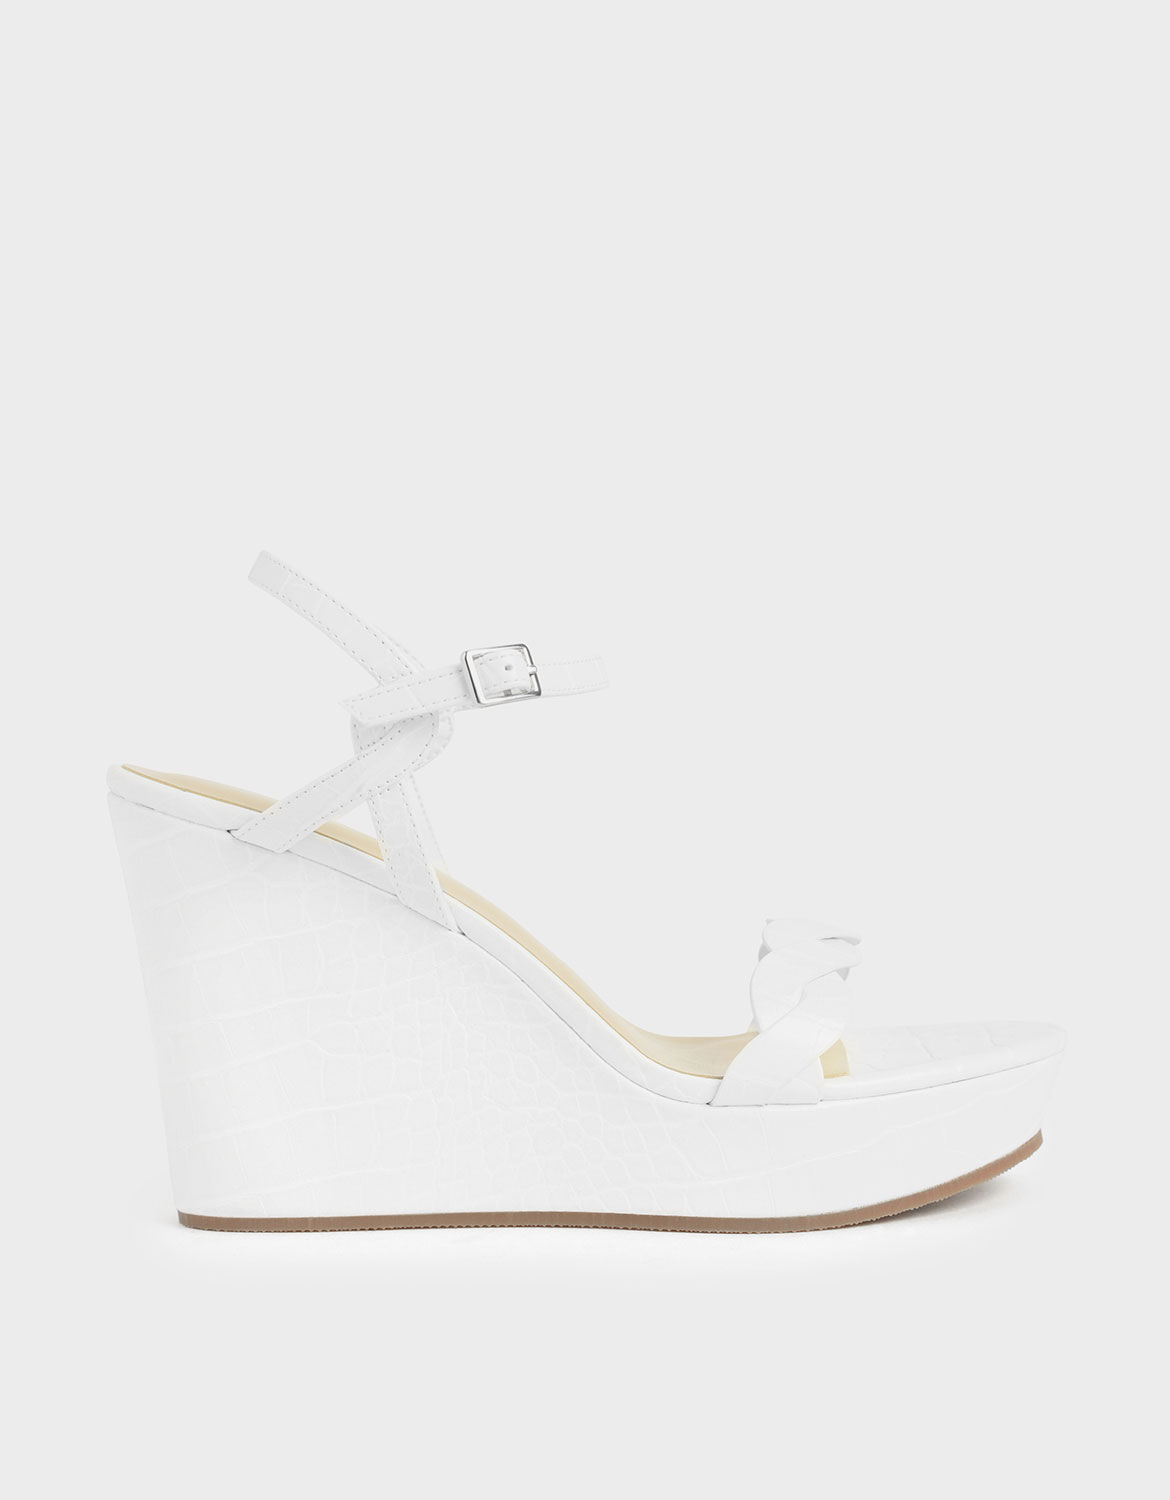 wedge white heels